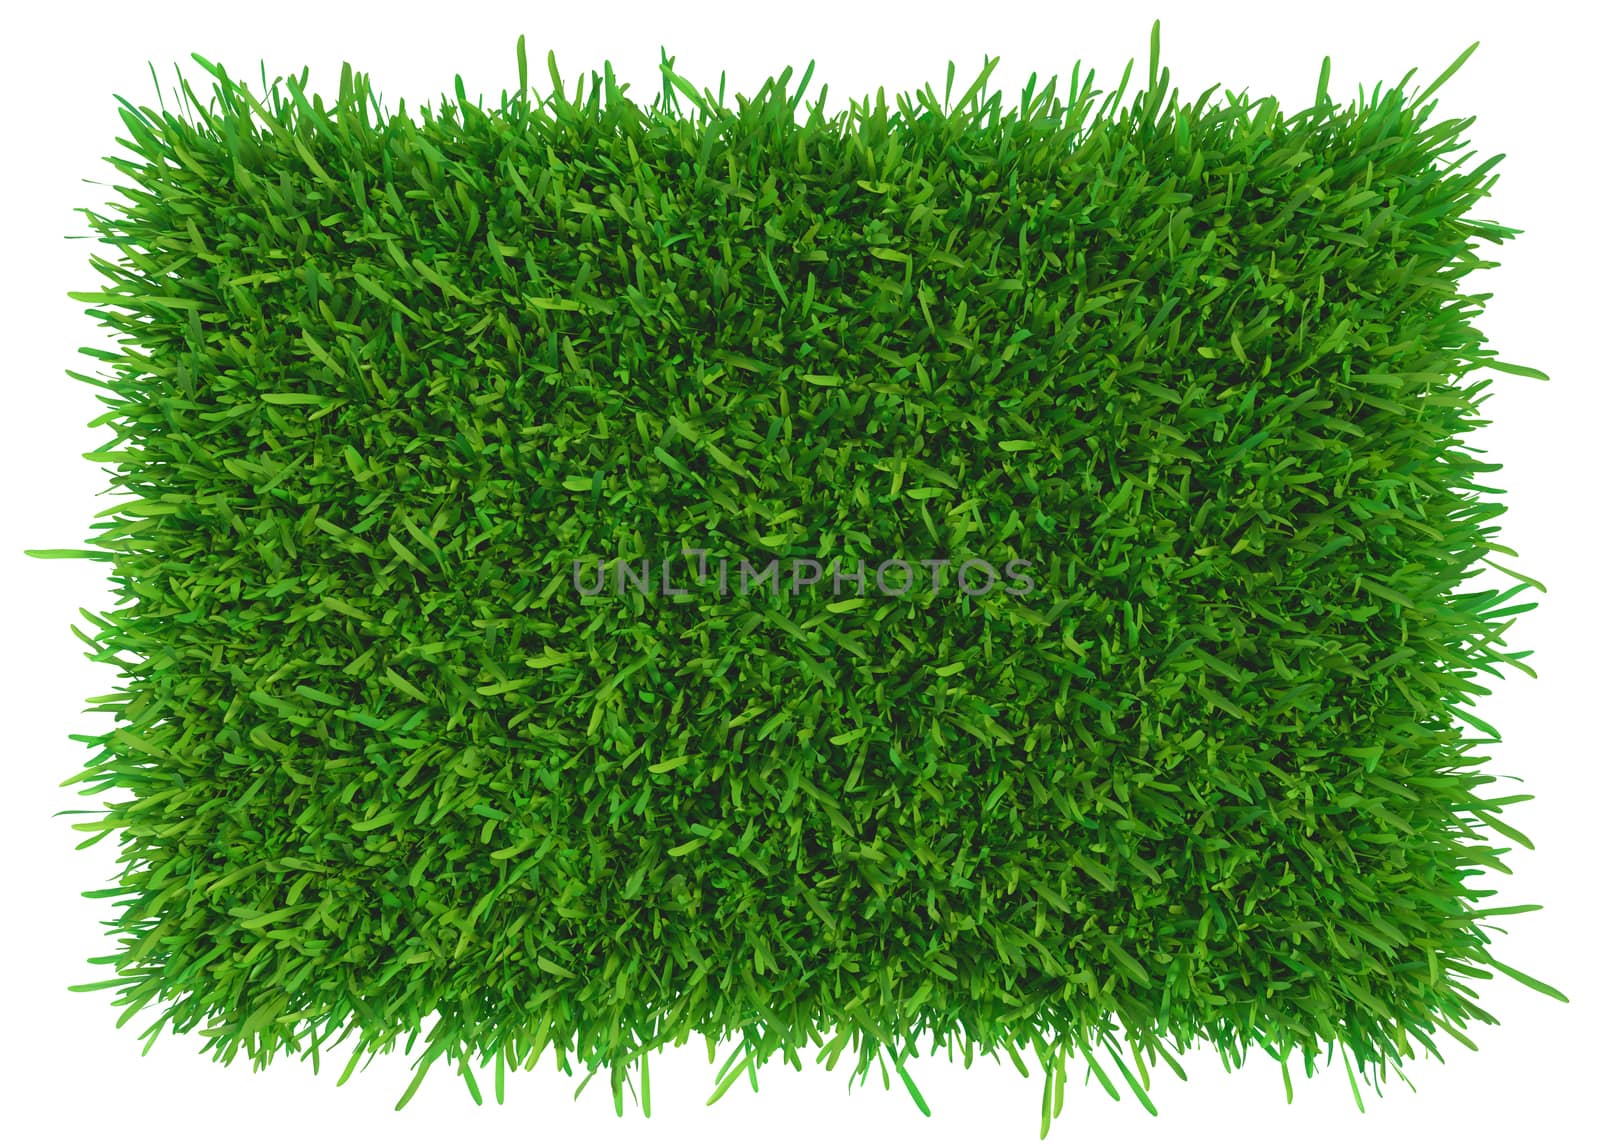 Grass background texture by Mirexon